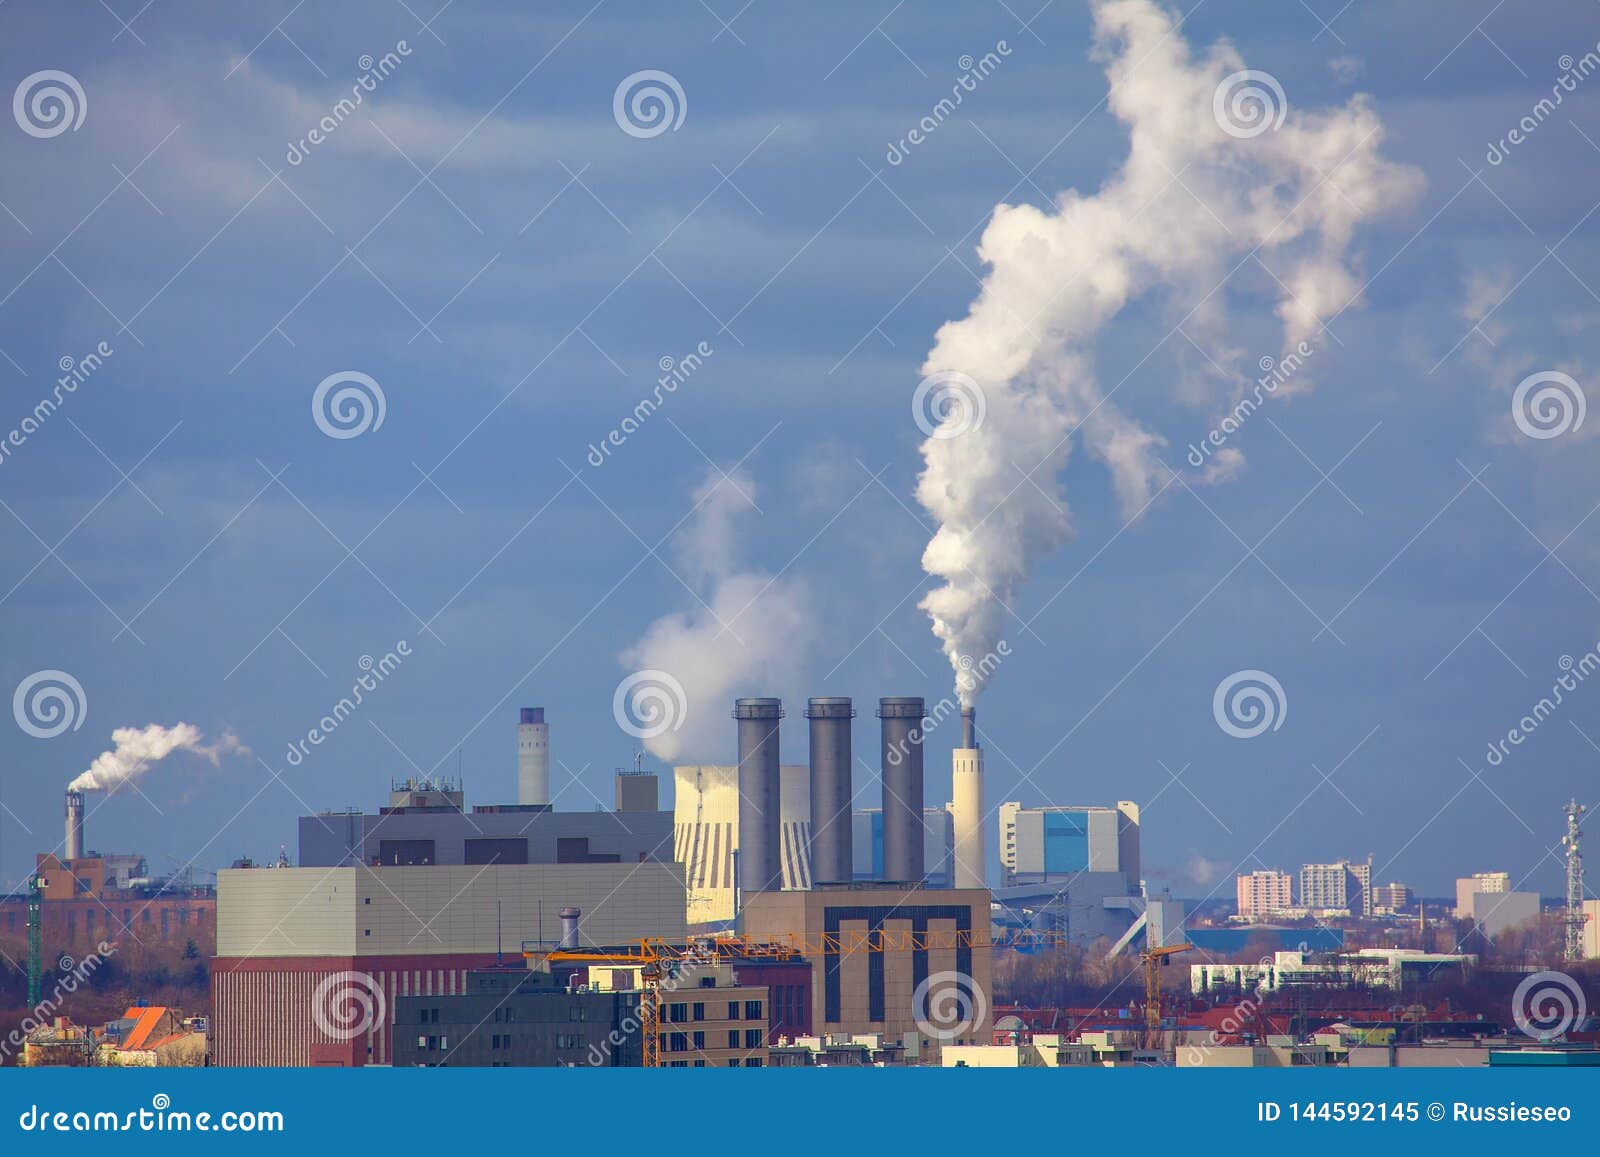 Industrial smoke in Berlin stock image. Image of city - 144592145